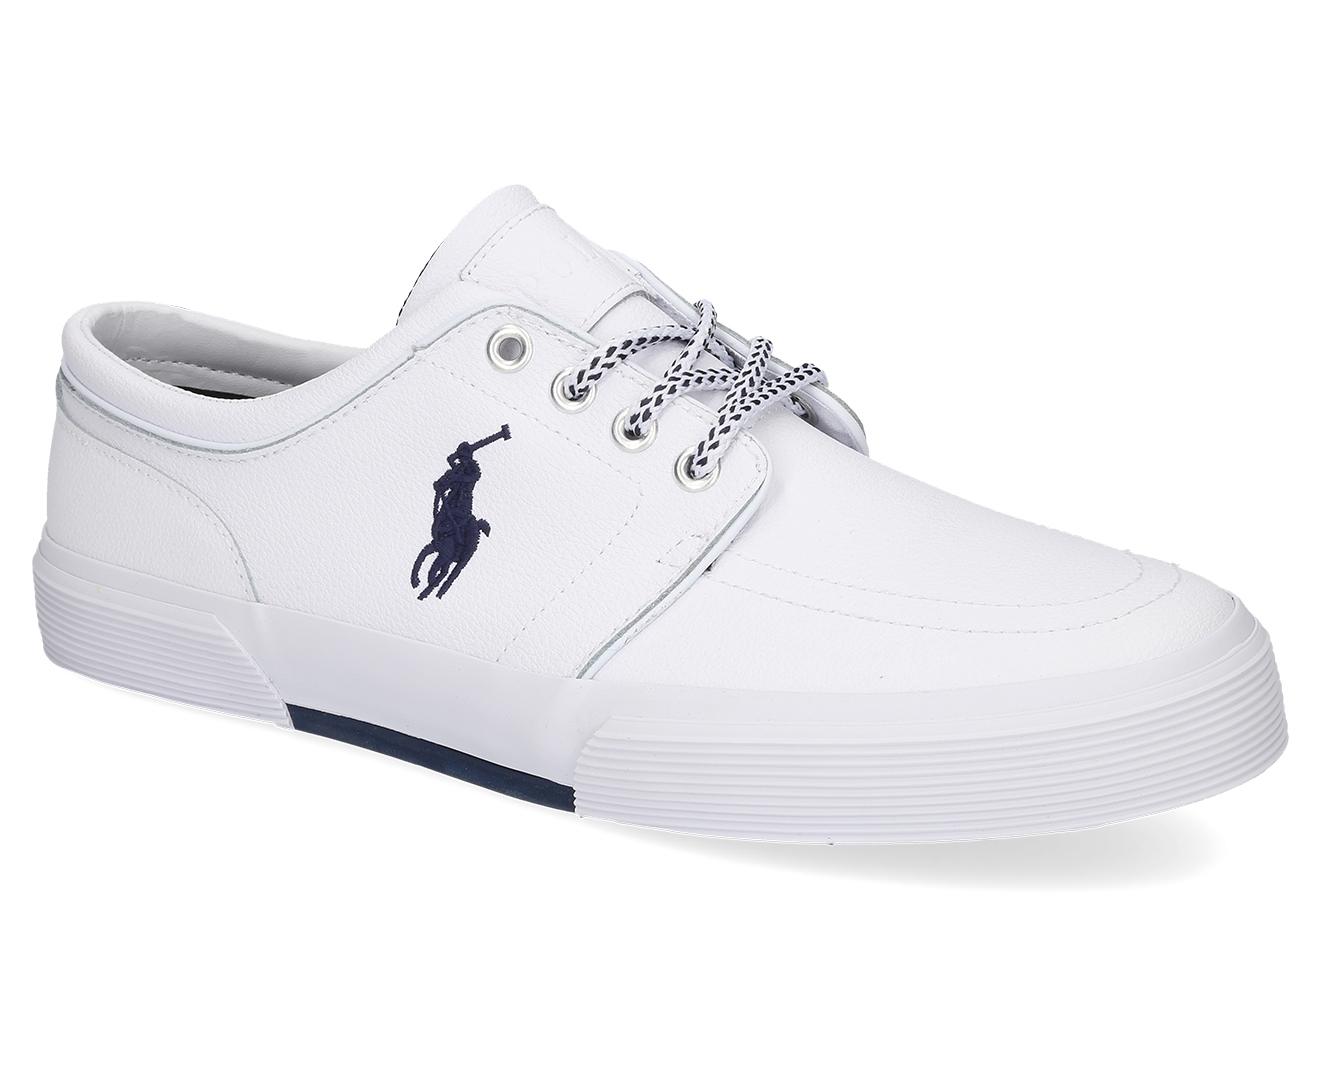 Polo Ralph Lauren Men's Faxon Low Sneakers - White Sports Leather ...